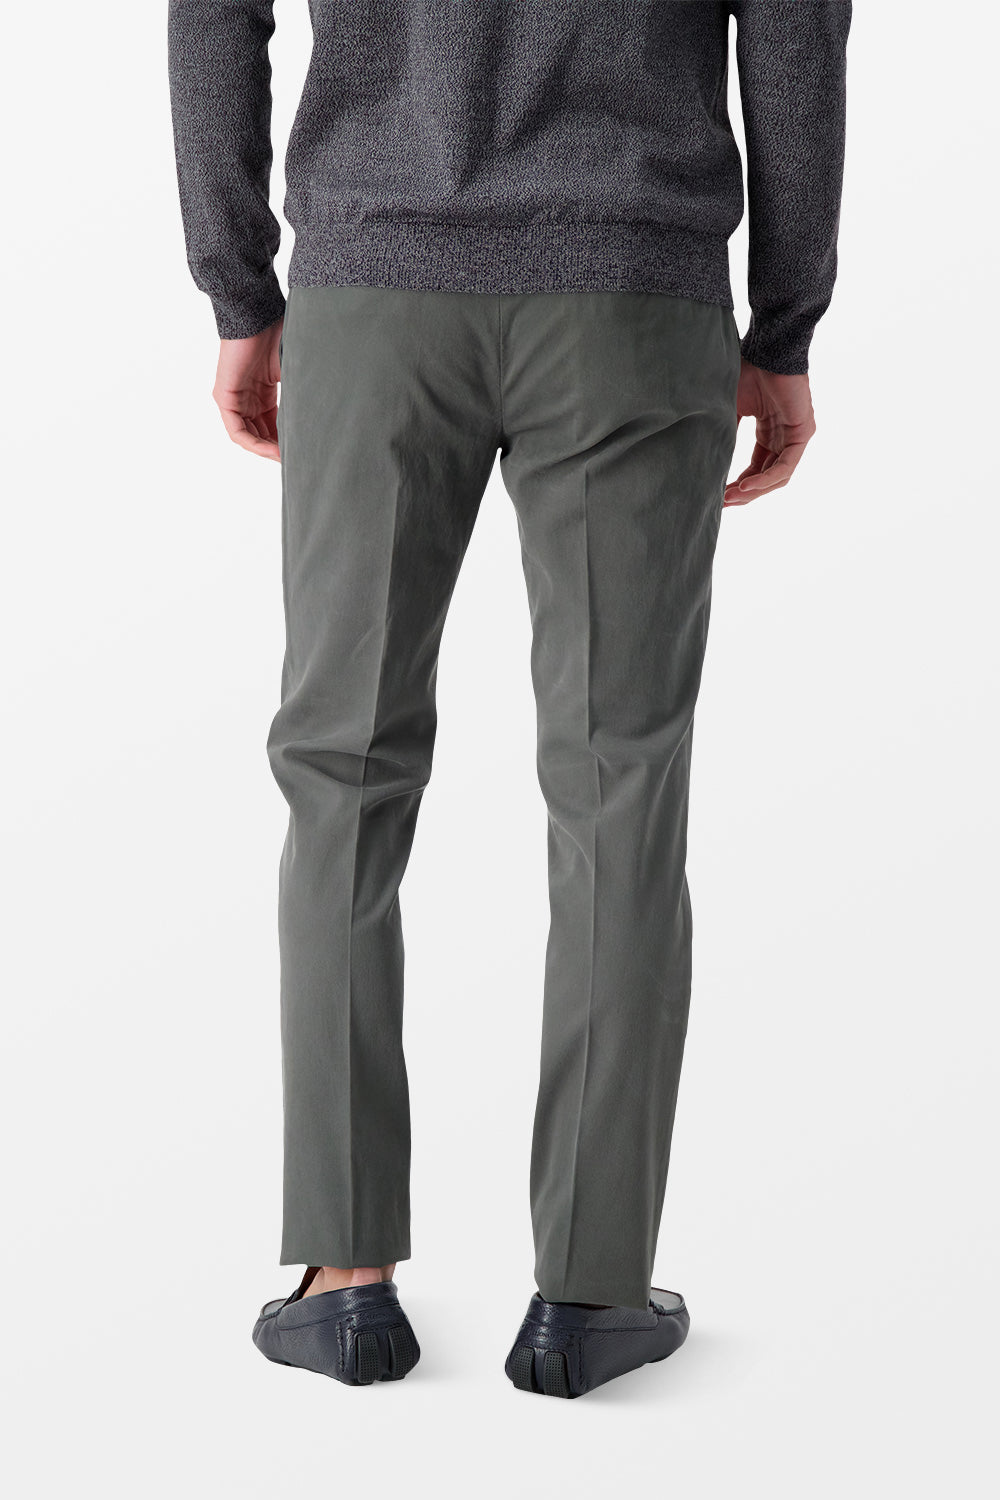 Incotex Grey Classic Trousers